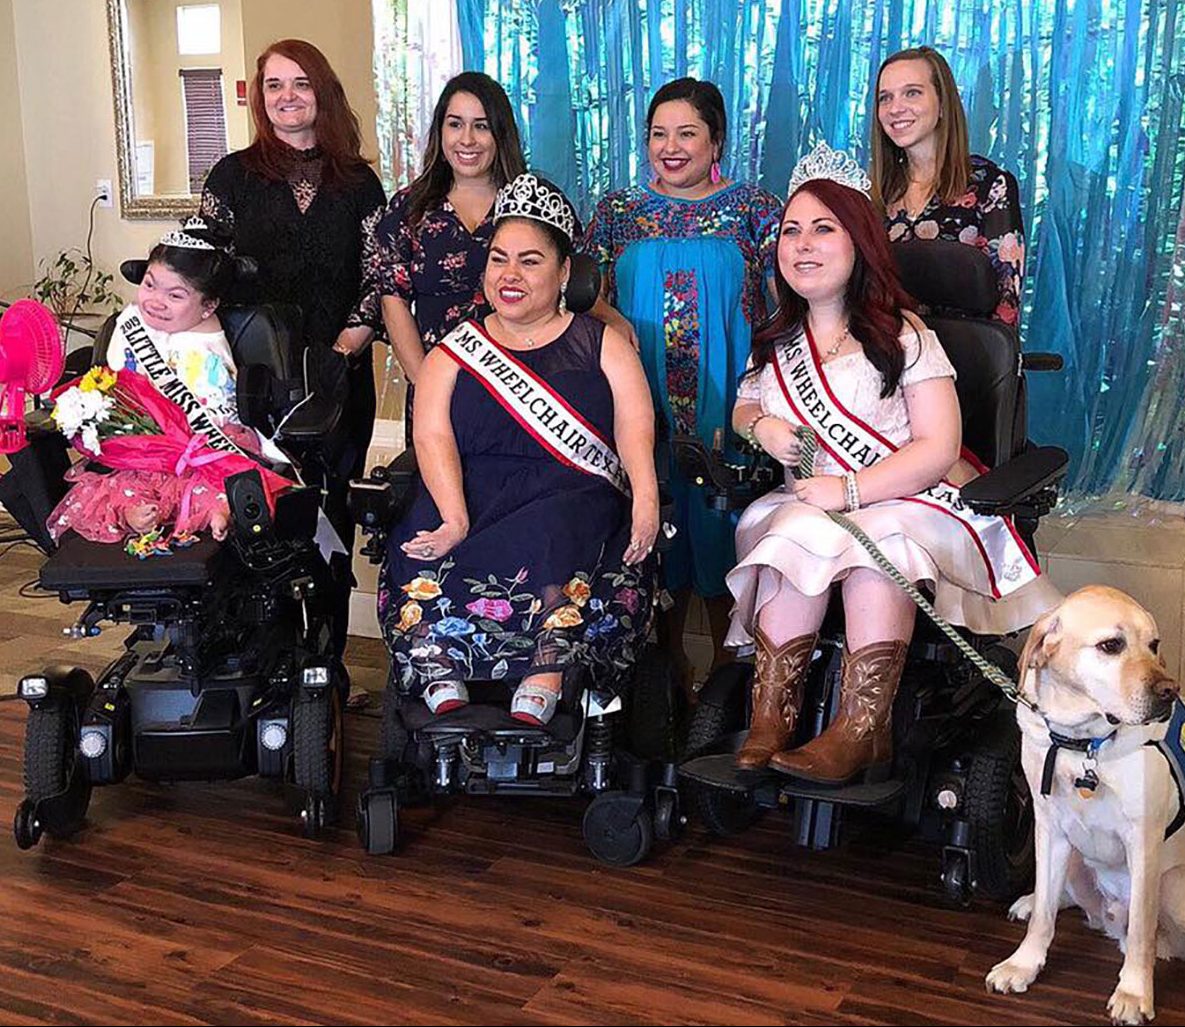 Lauren with other Miss Wheelchair Texas contestants